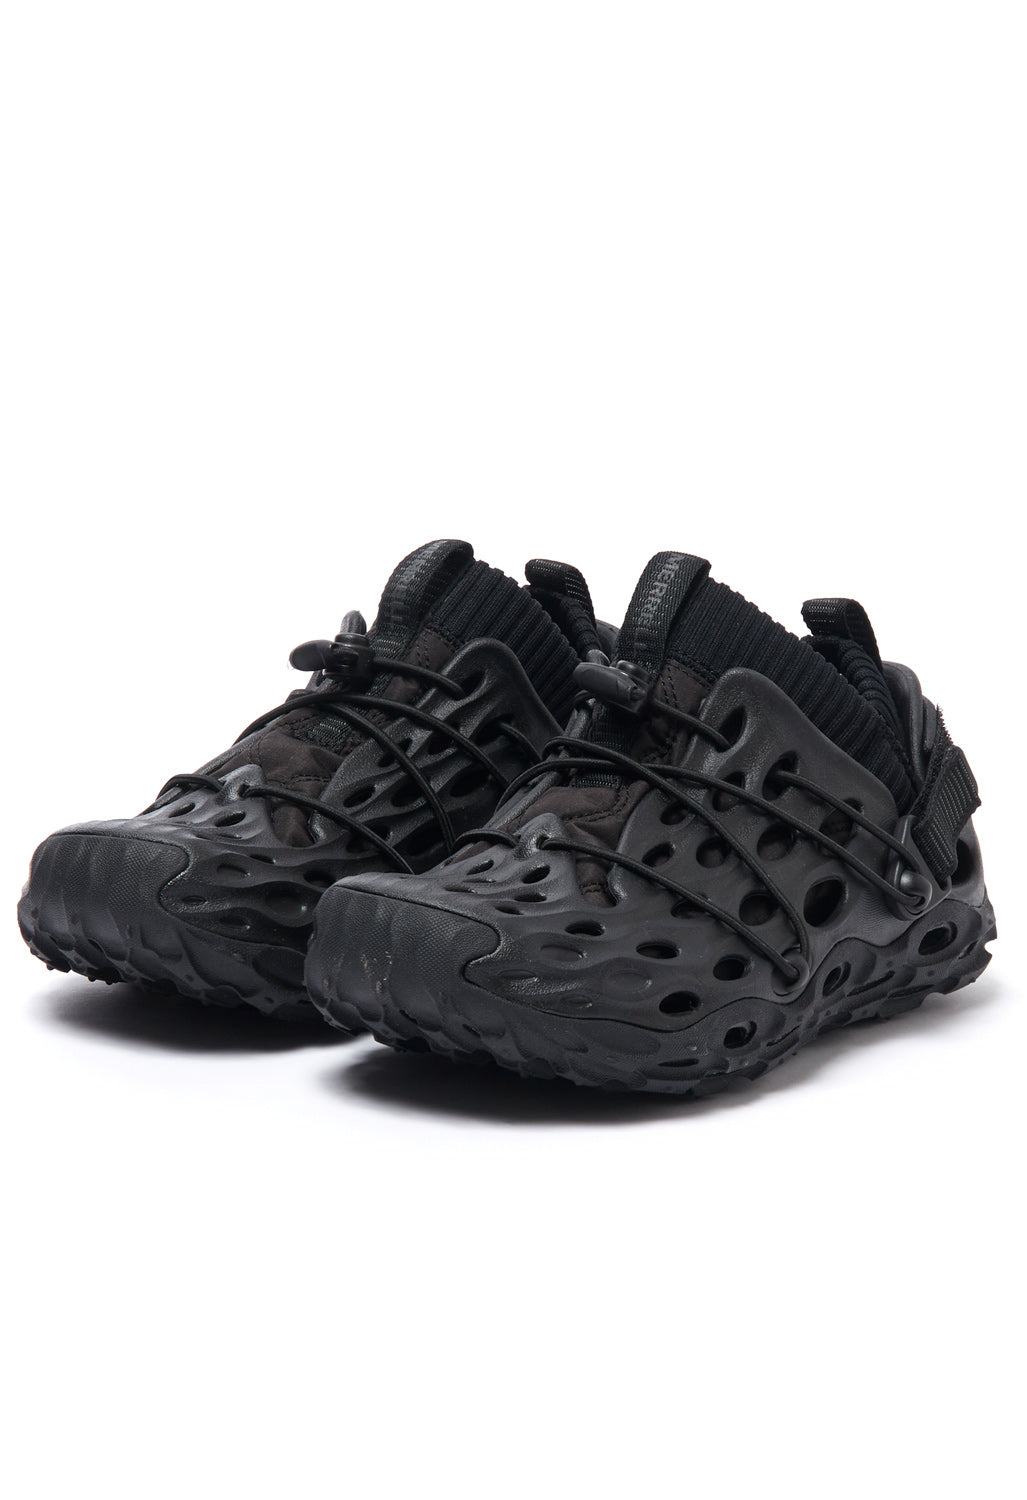 Merrell Hydro Moc AT Ripstop 1TRL Women's Shoes - Black